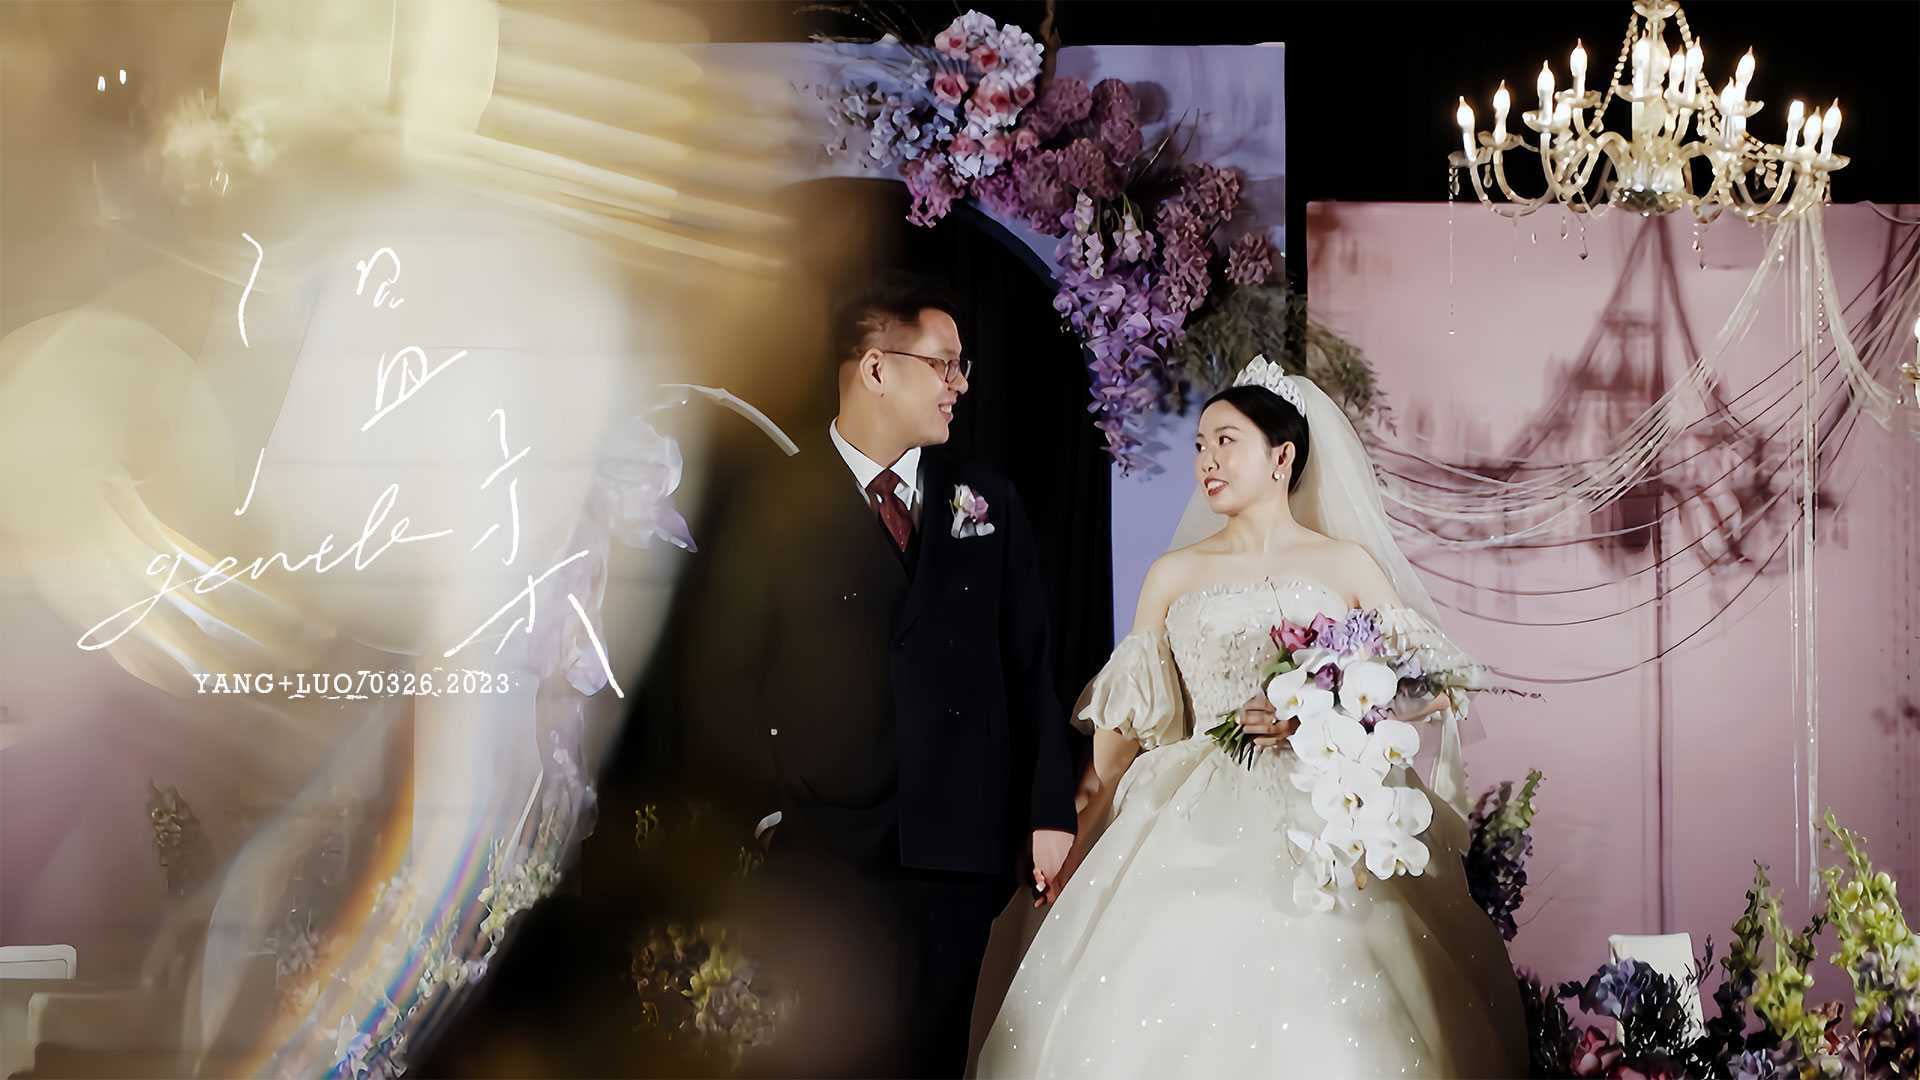 Yang+Luo wedding film「给你我的温柔和陪伴」